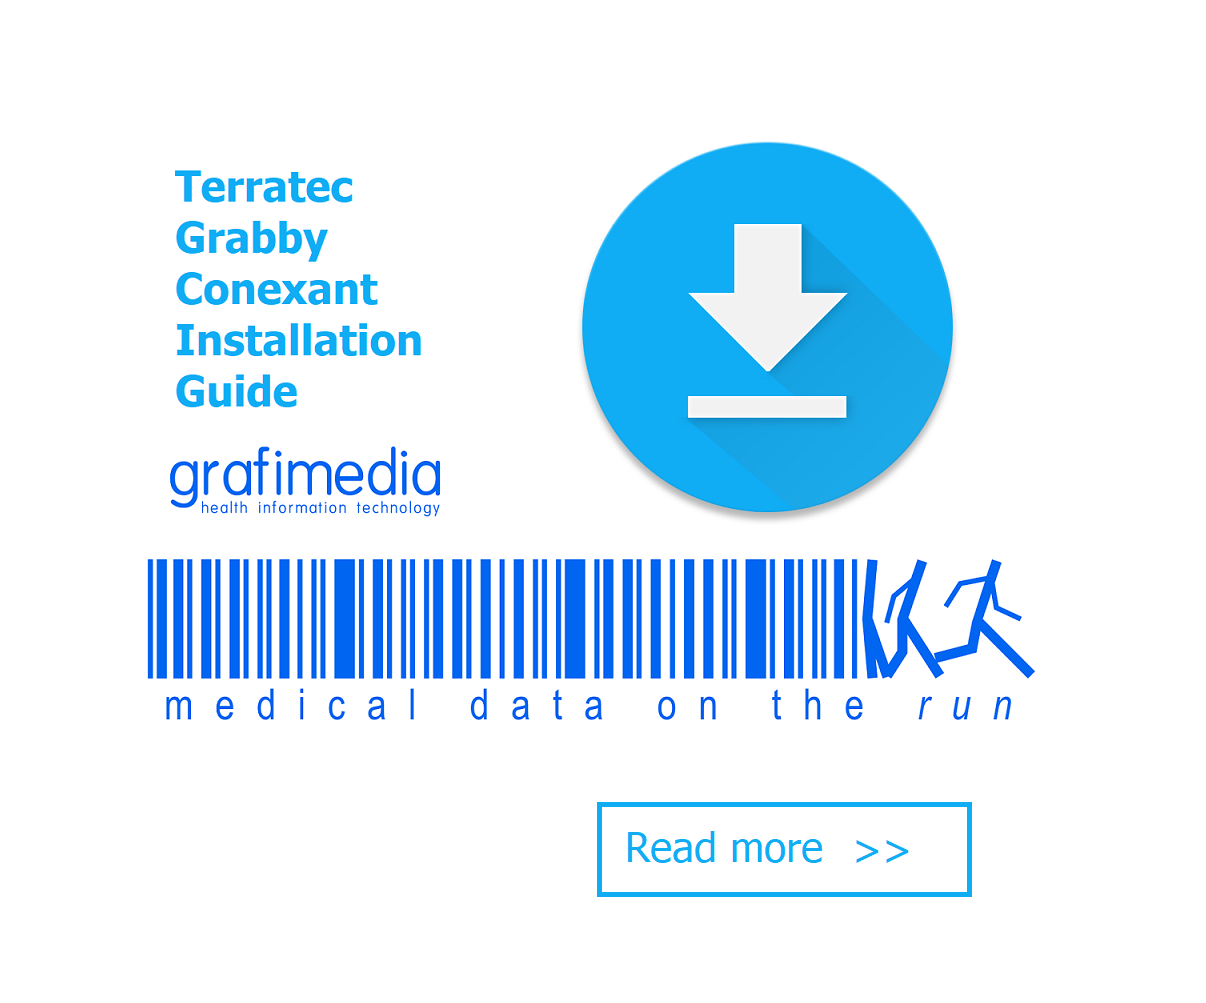 Terratec Grabby Conexant II Installation Guide by Grafimedia